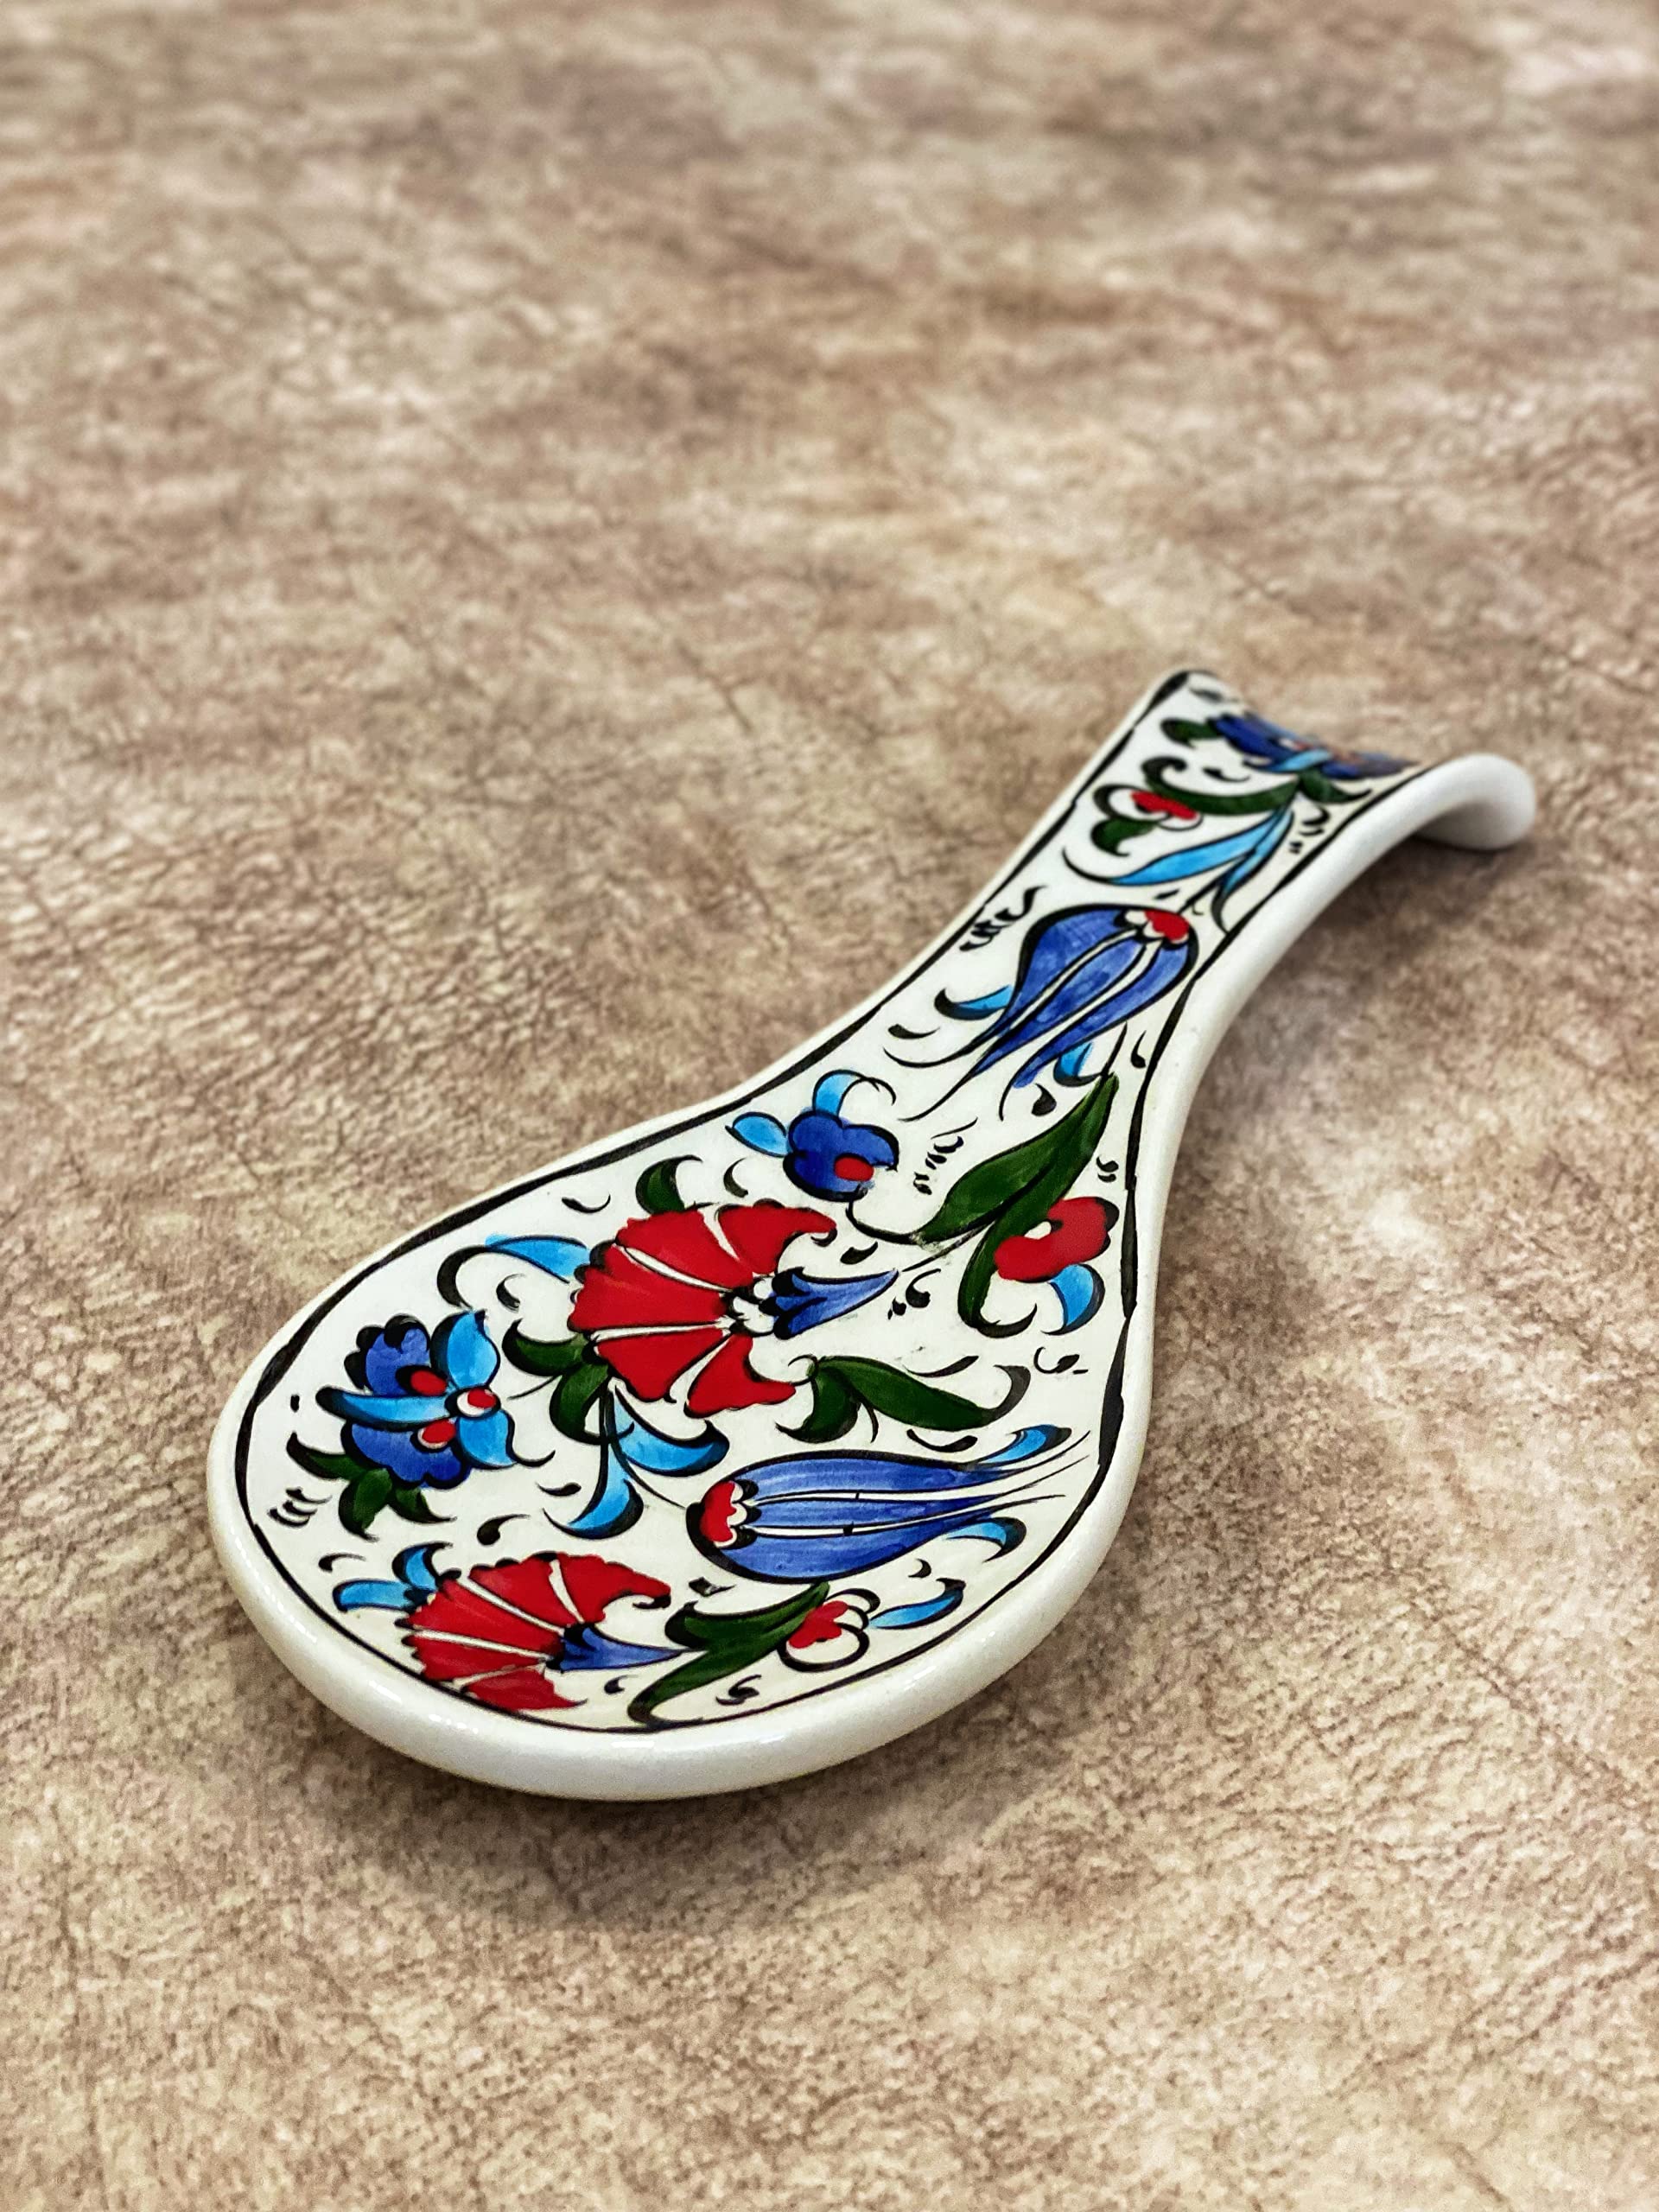 IstanbulArtWorkshop Turkish Ceramic Spoon Rest For Kitchen, Handmade Pottery Spoon Holder, Spoon Rest For Kitchen